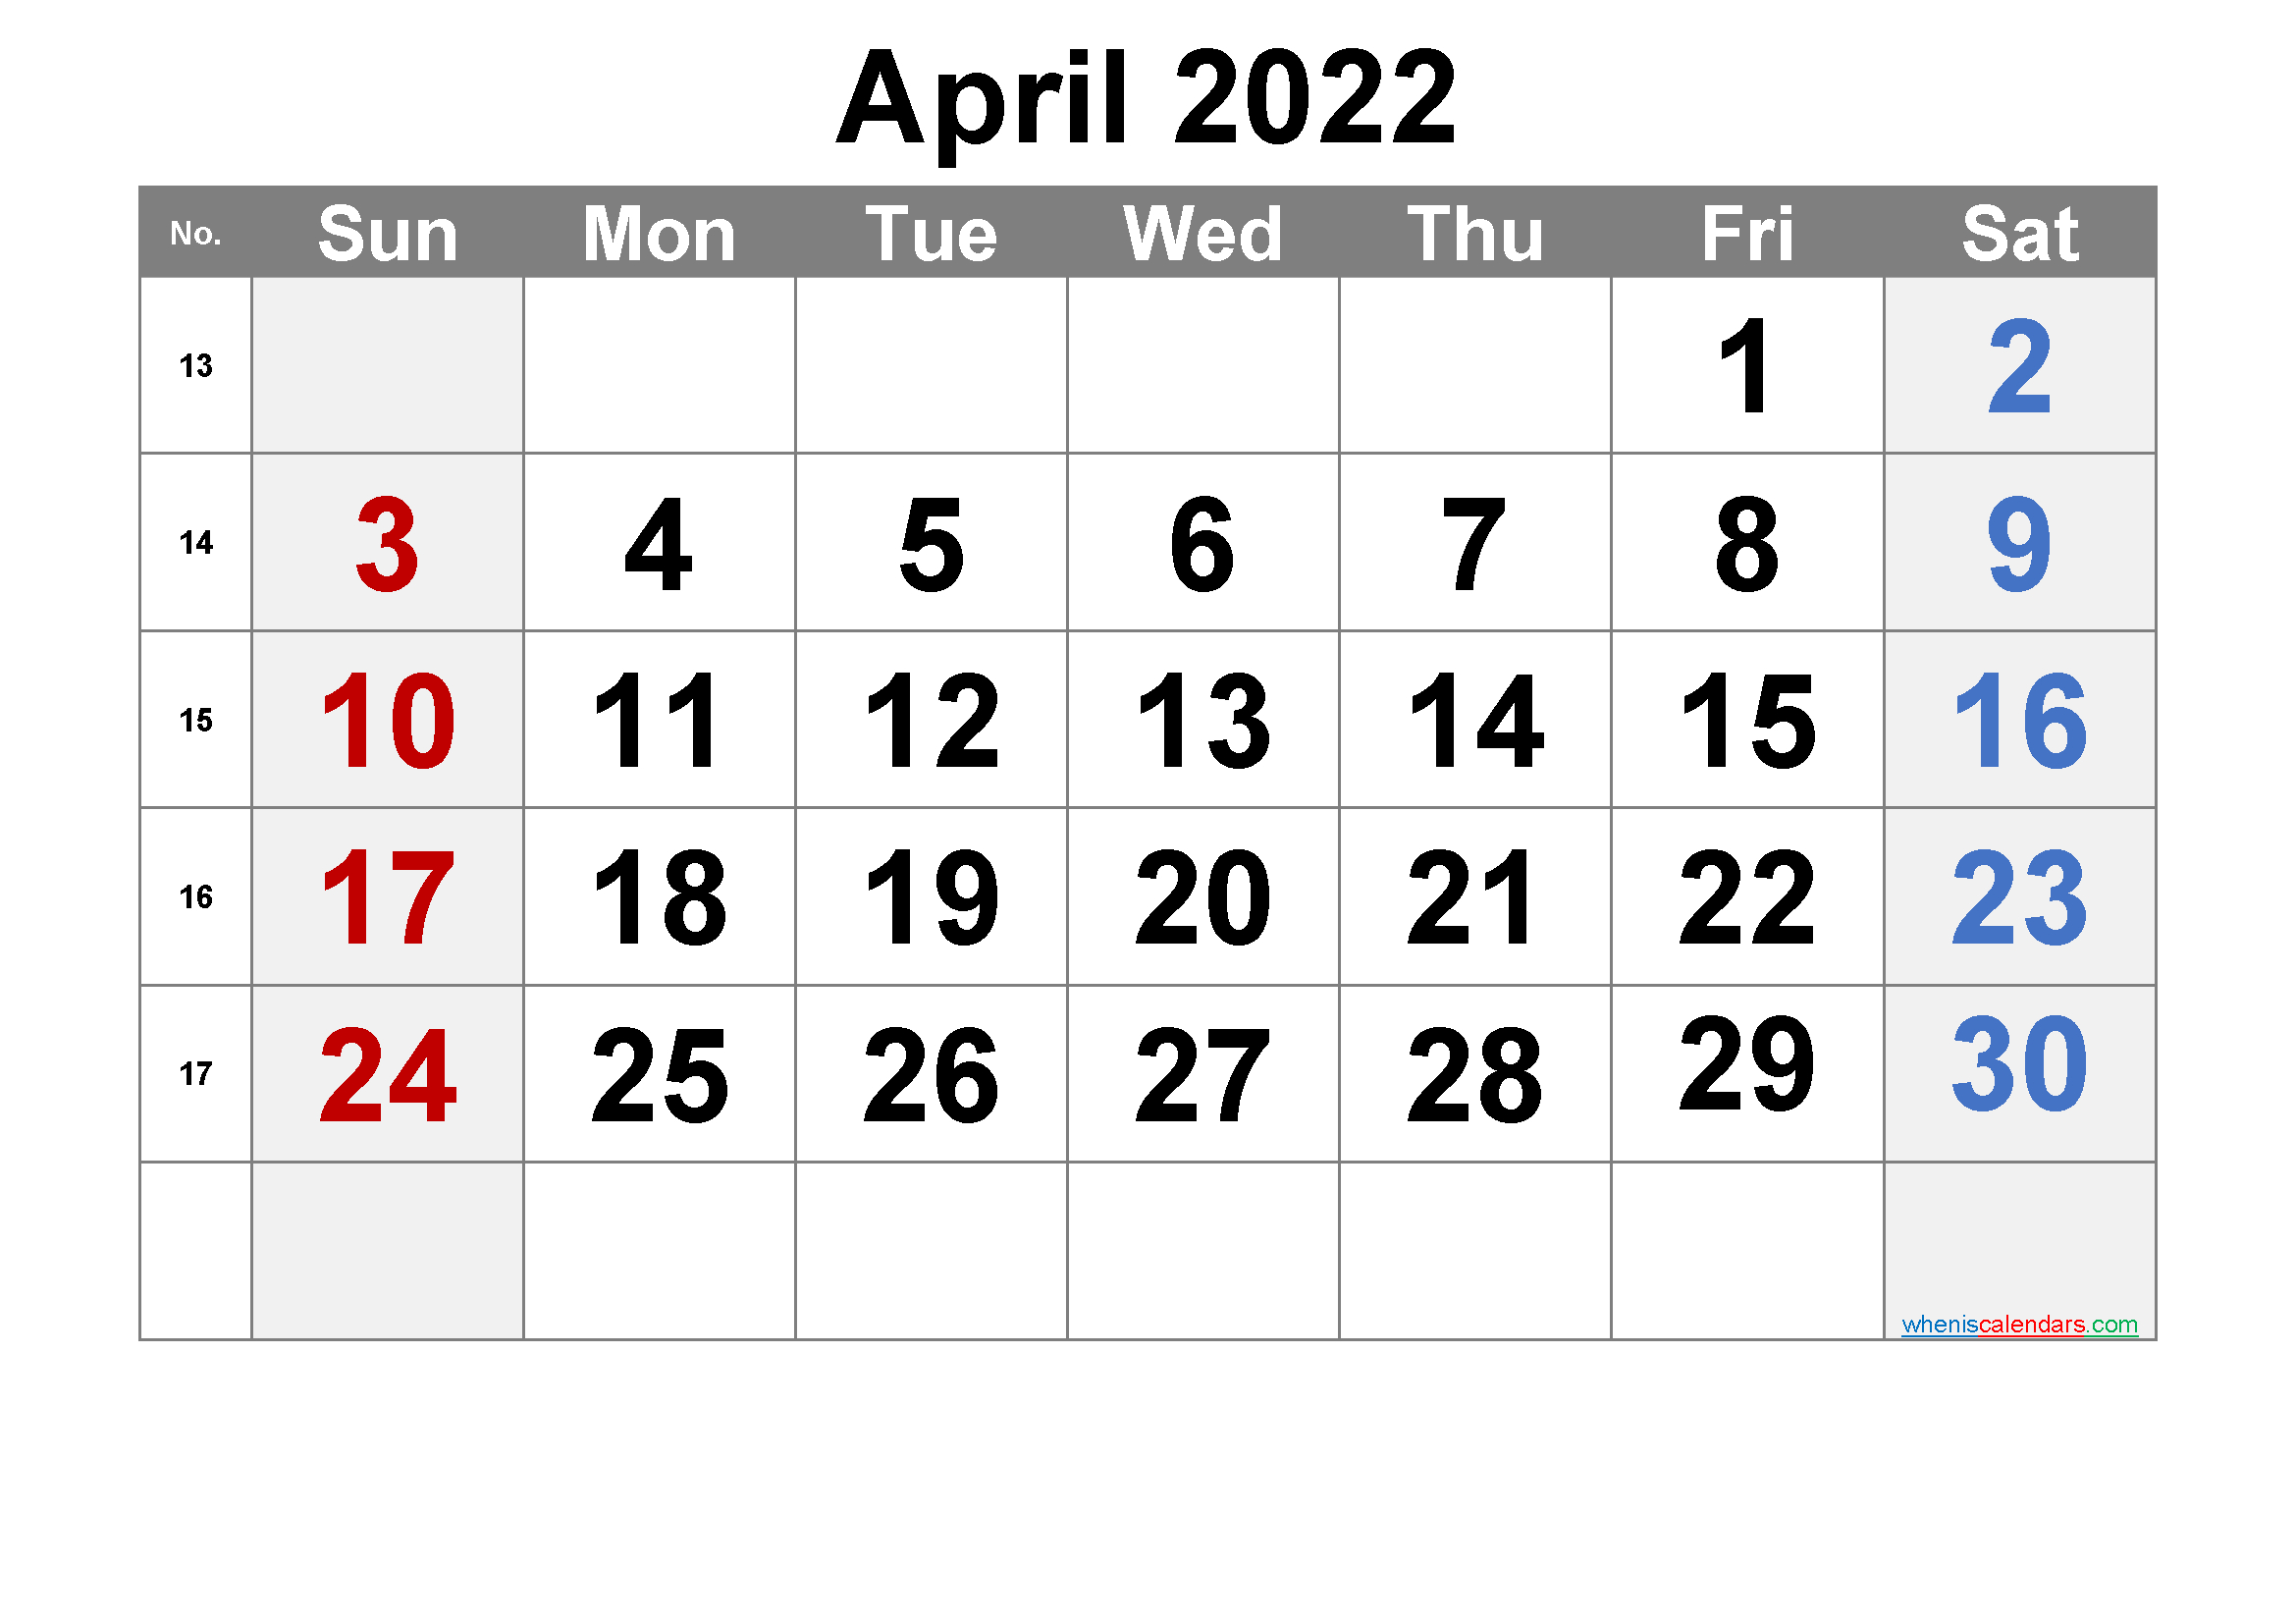 Pick Calendar December 2021 To April 2022